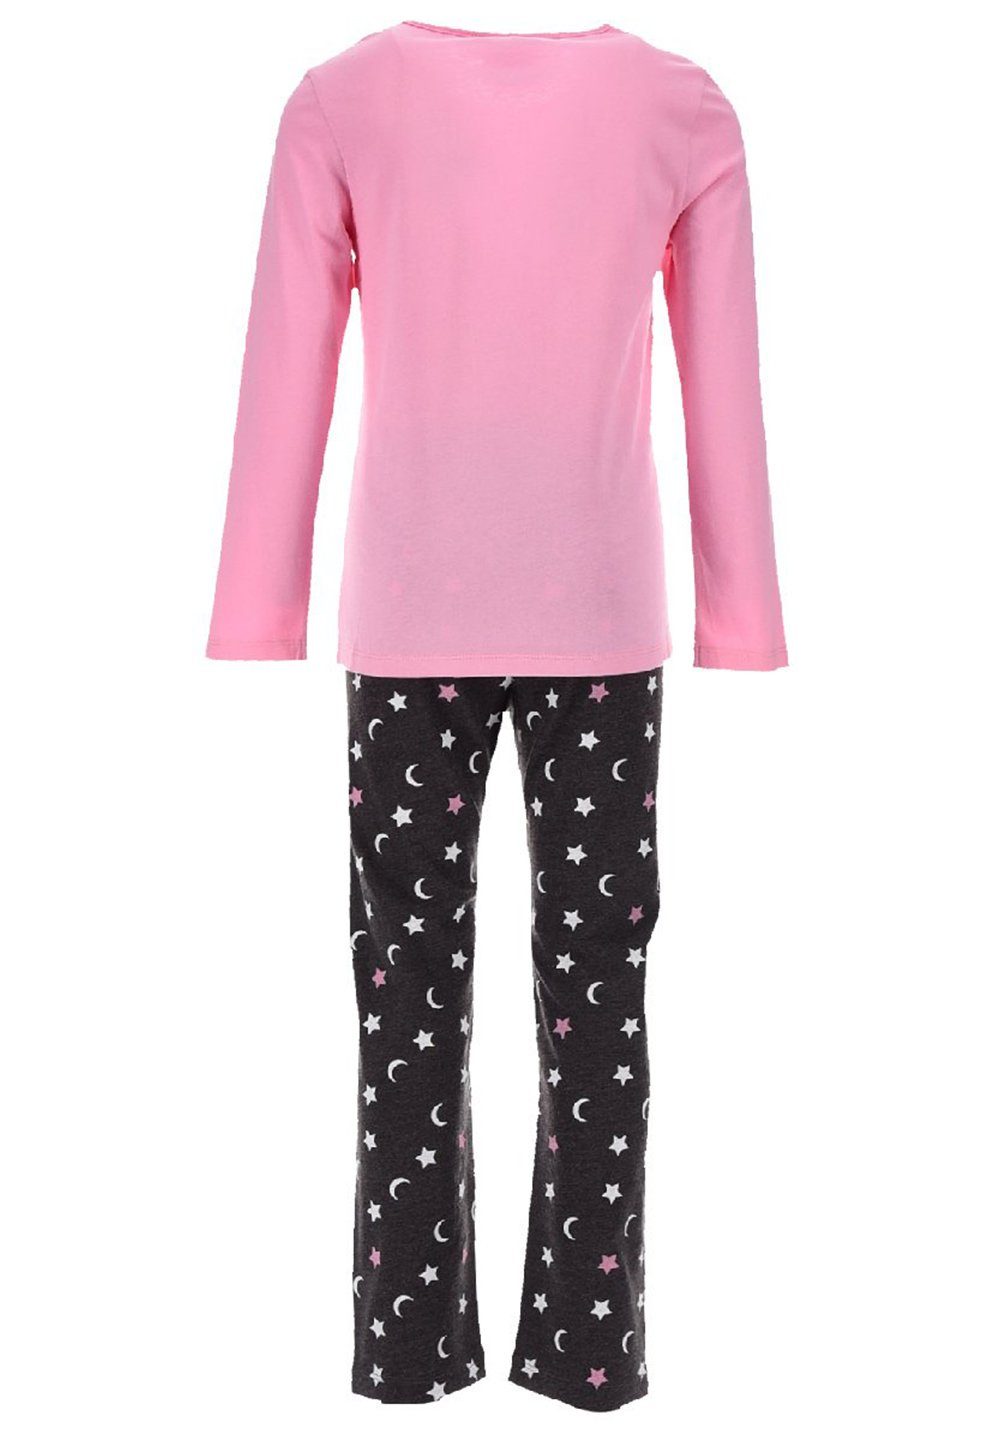 Pink Schlaf-Hose Mädchen Langarm Schlafanzug Schlafanzug SURPRISE! Kinder Kinder L.O.L. + Pyjama Shirt